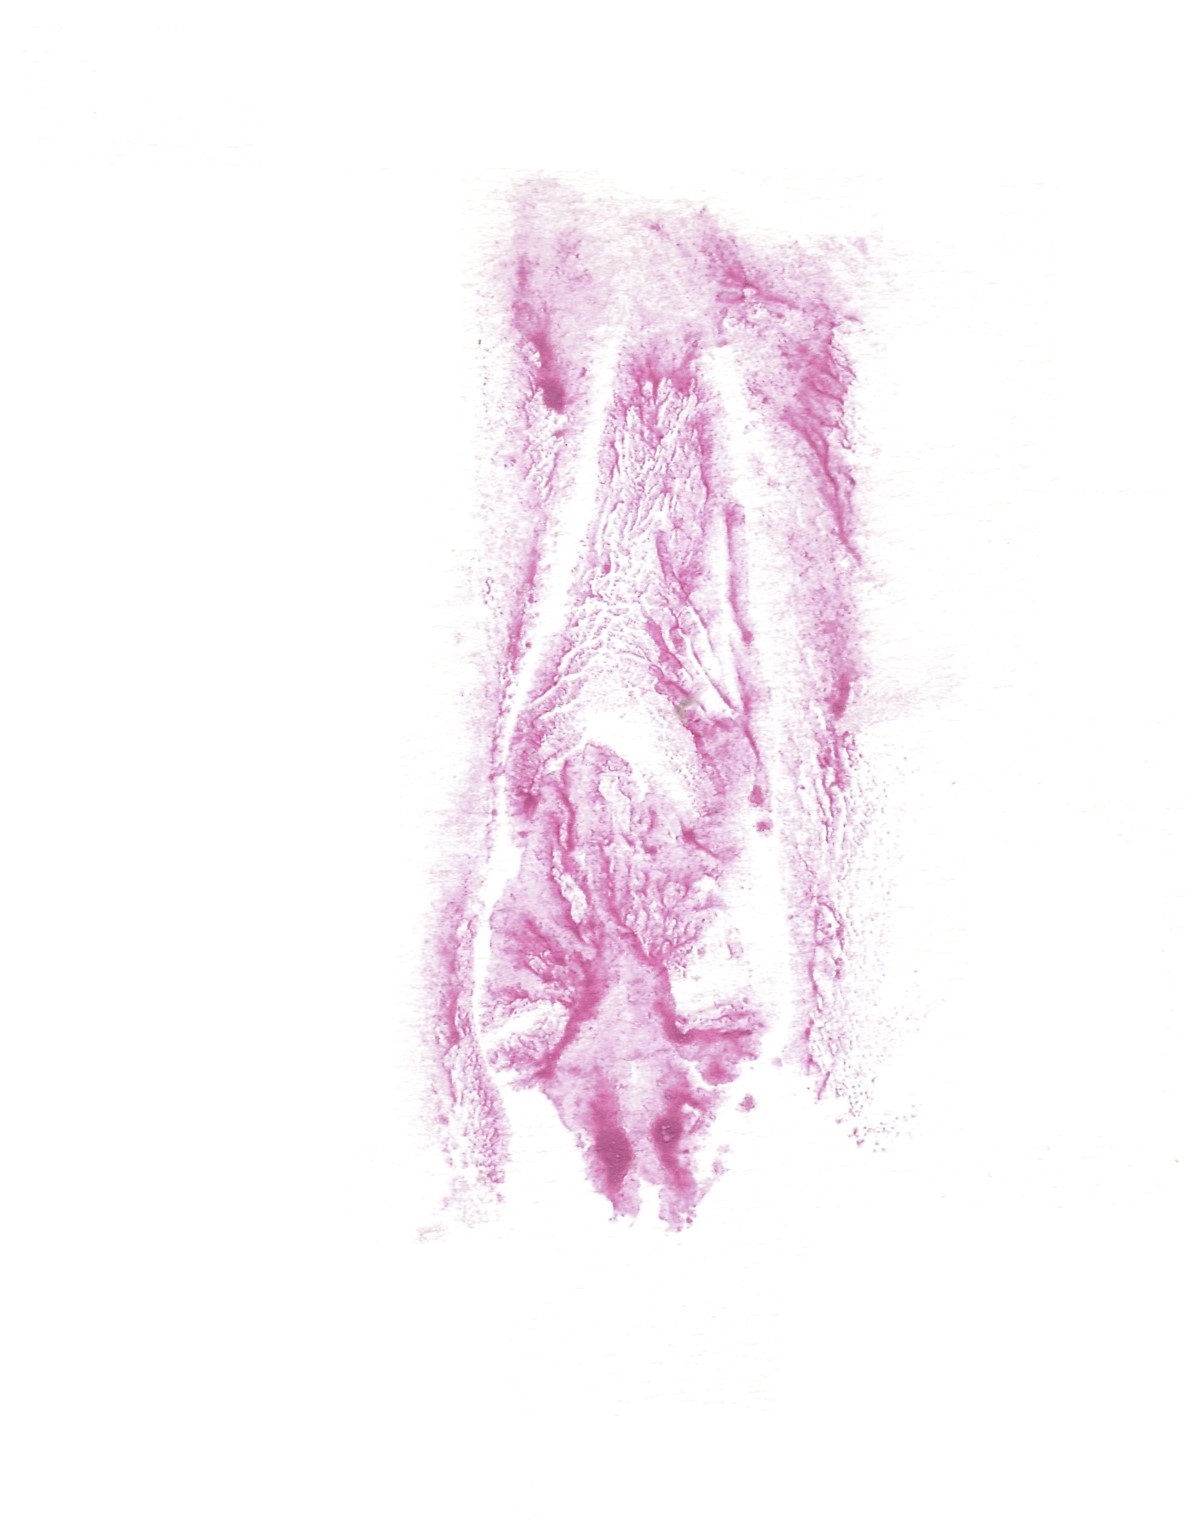 red print of vulva on white paper